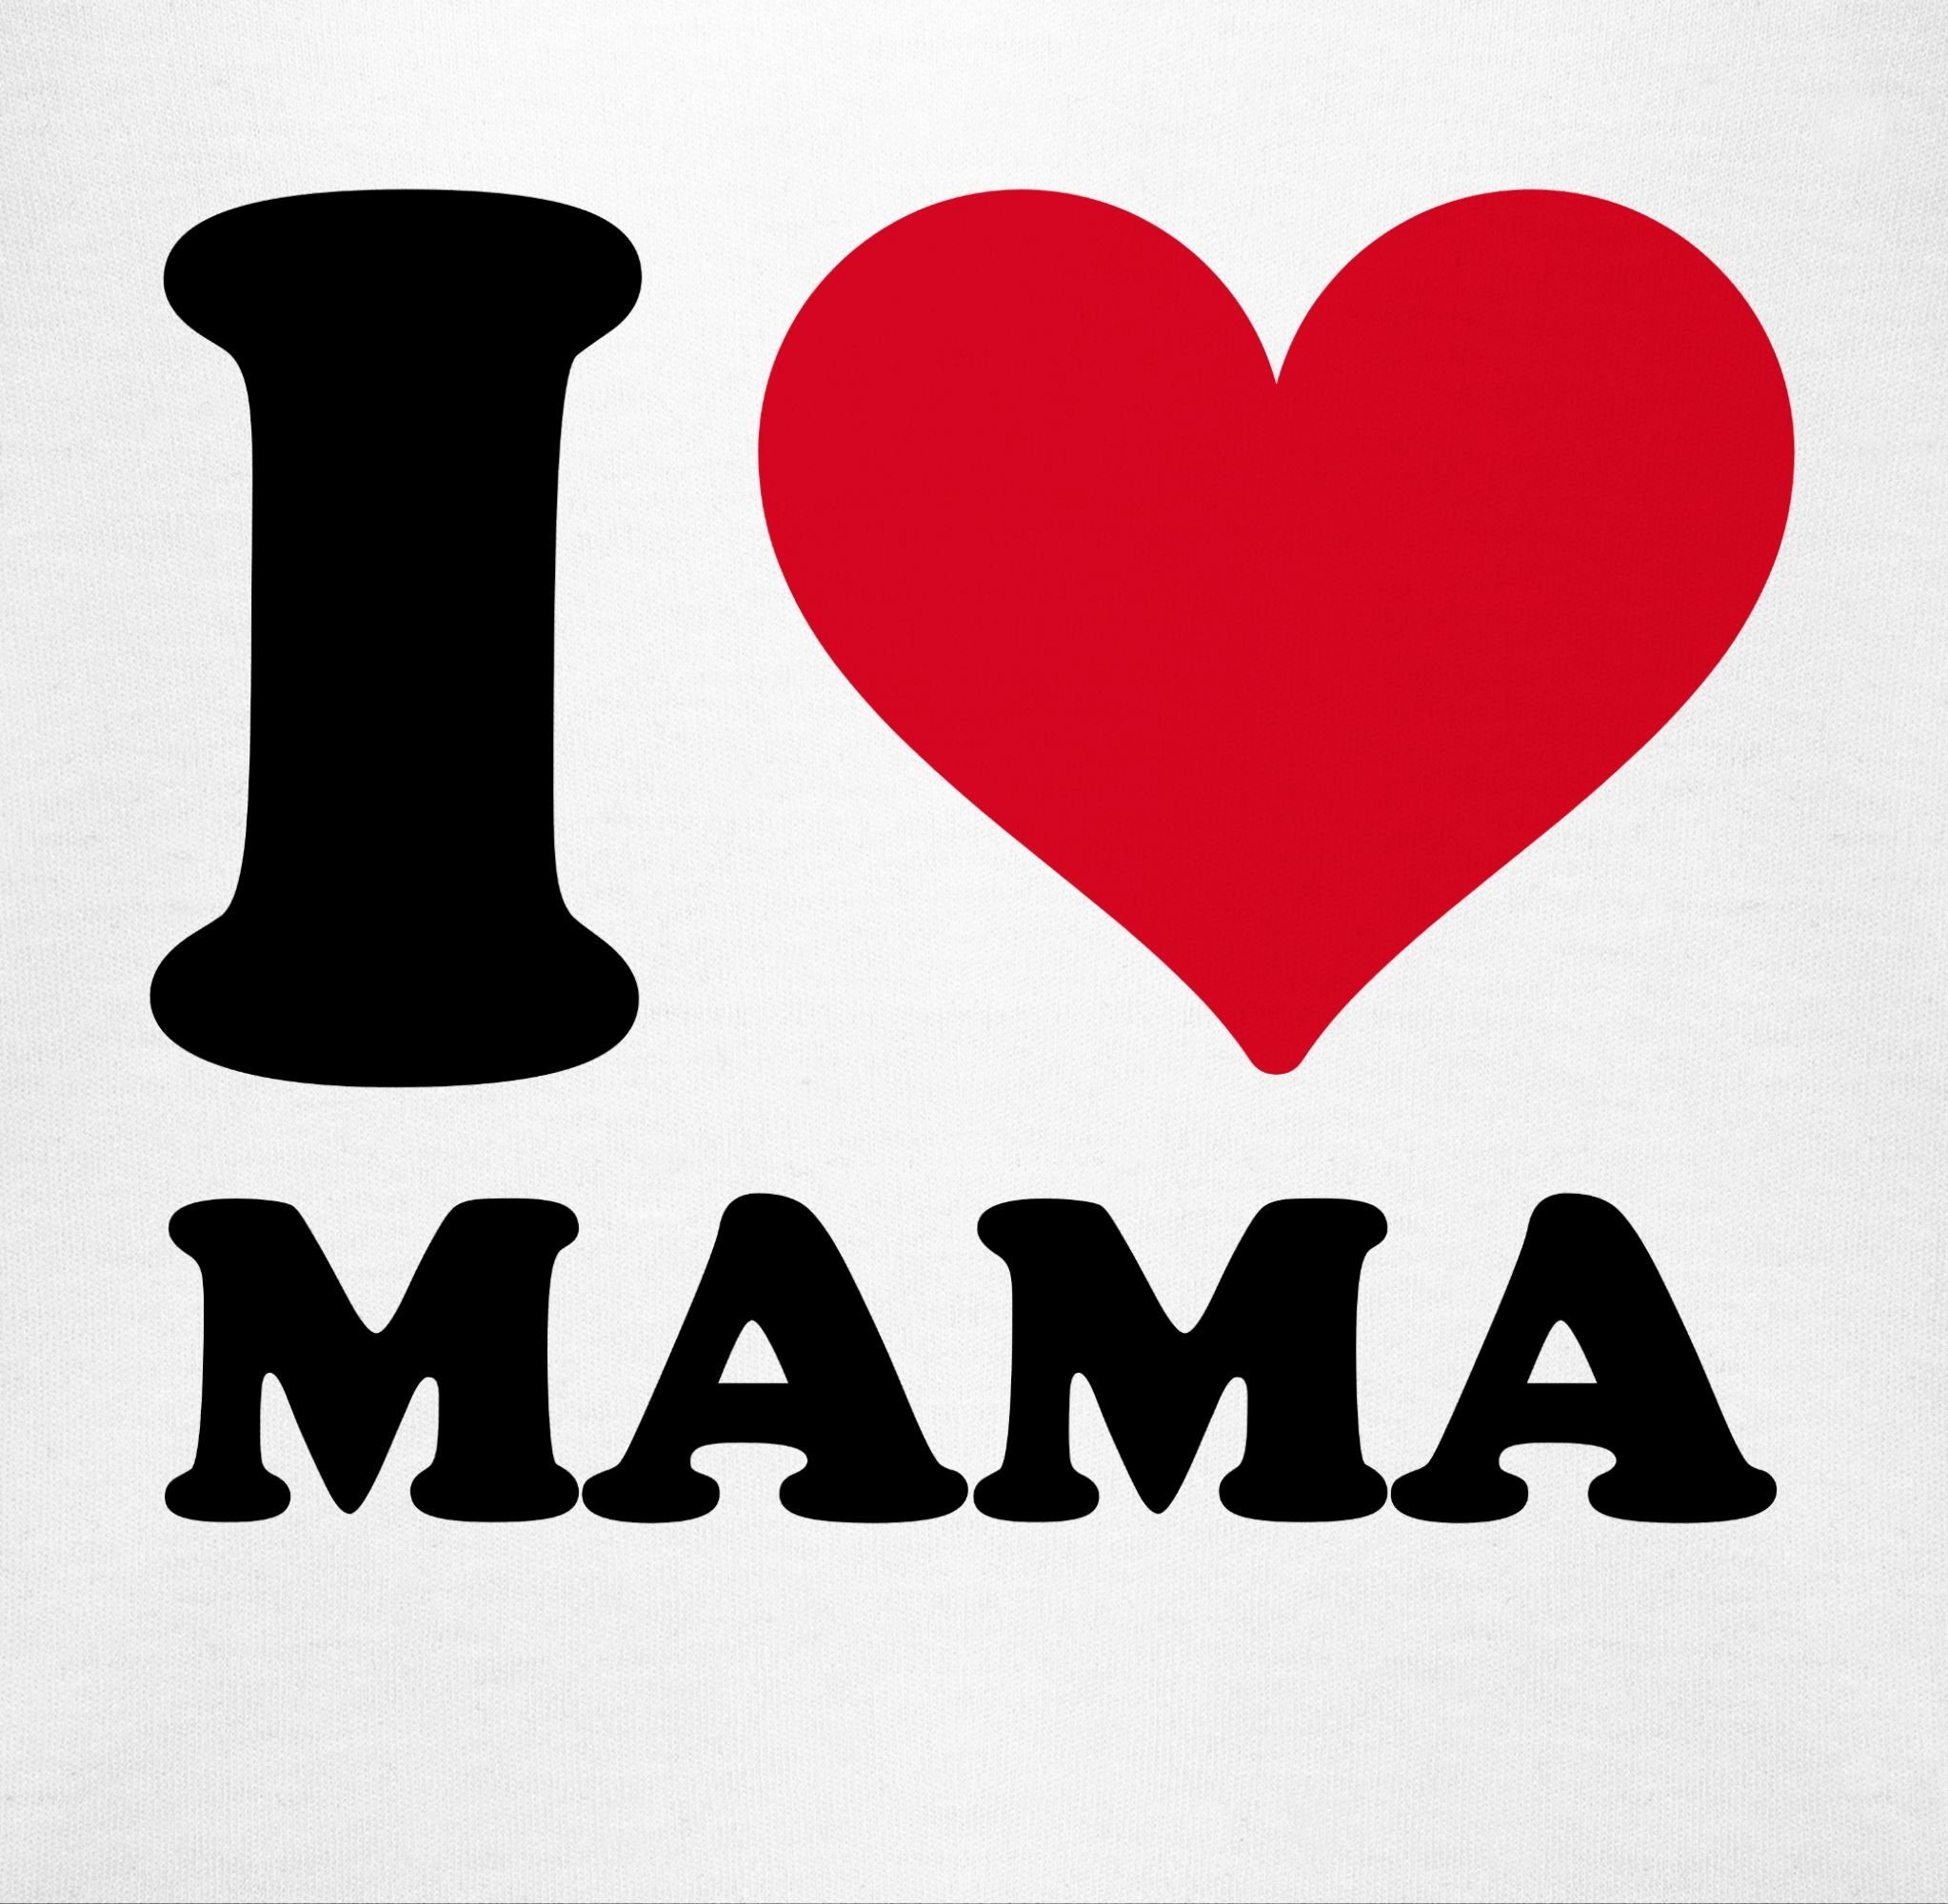 Shirtbody Muttertagsgeschenk 1 Mama Weiß Love Shirtracer (1-tlg) I